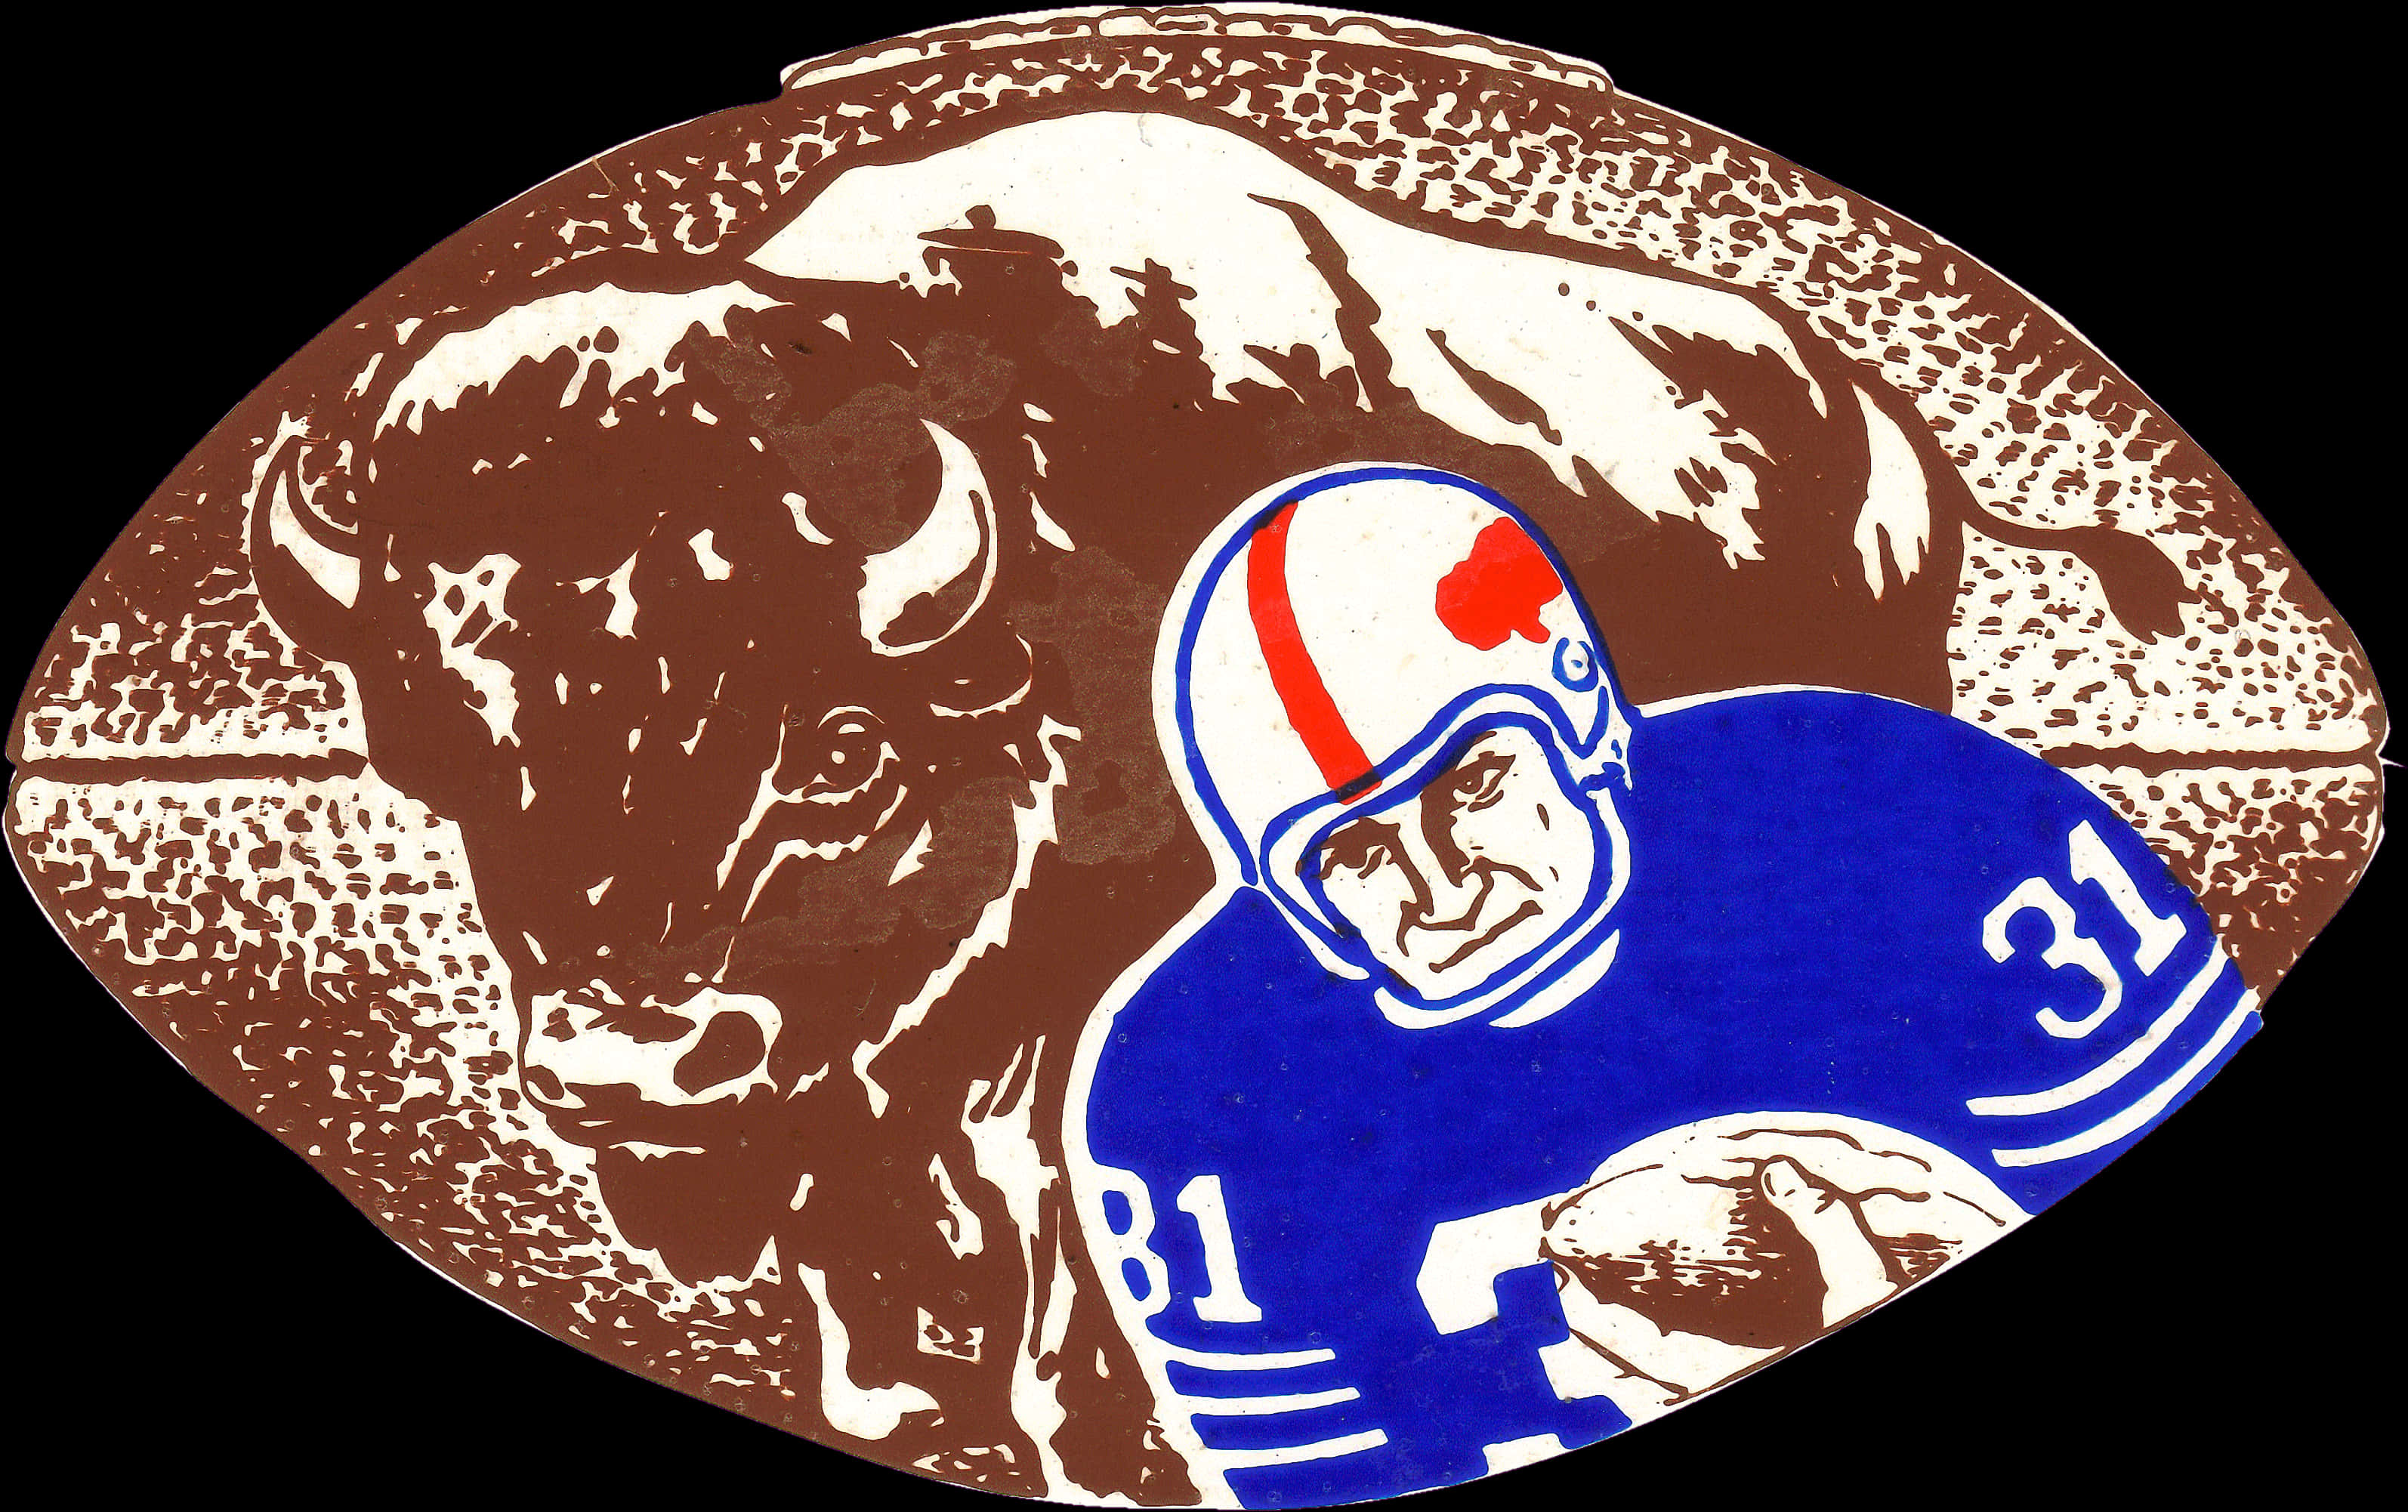 Vintage Football Playerand Buffalo Illustration